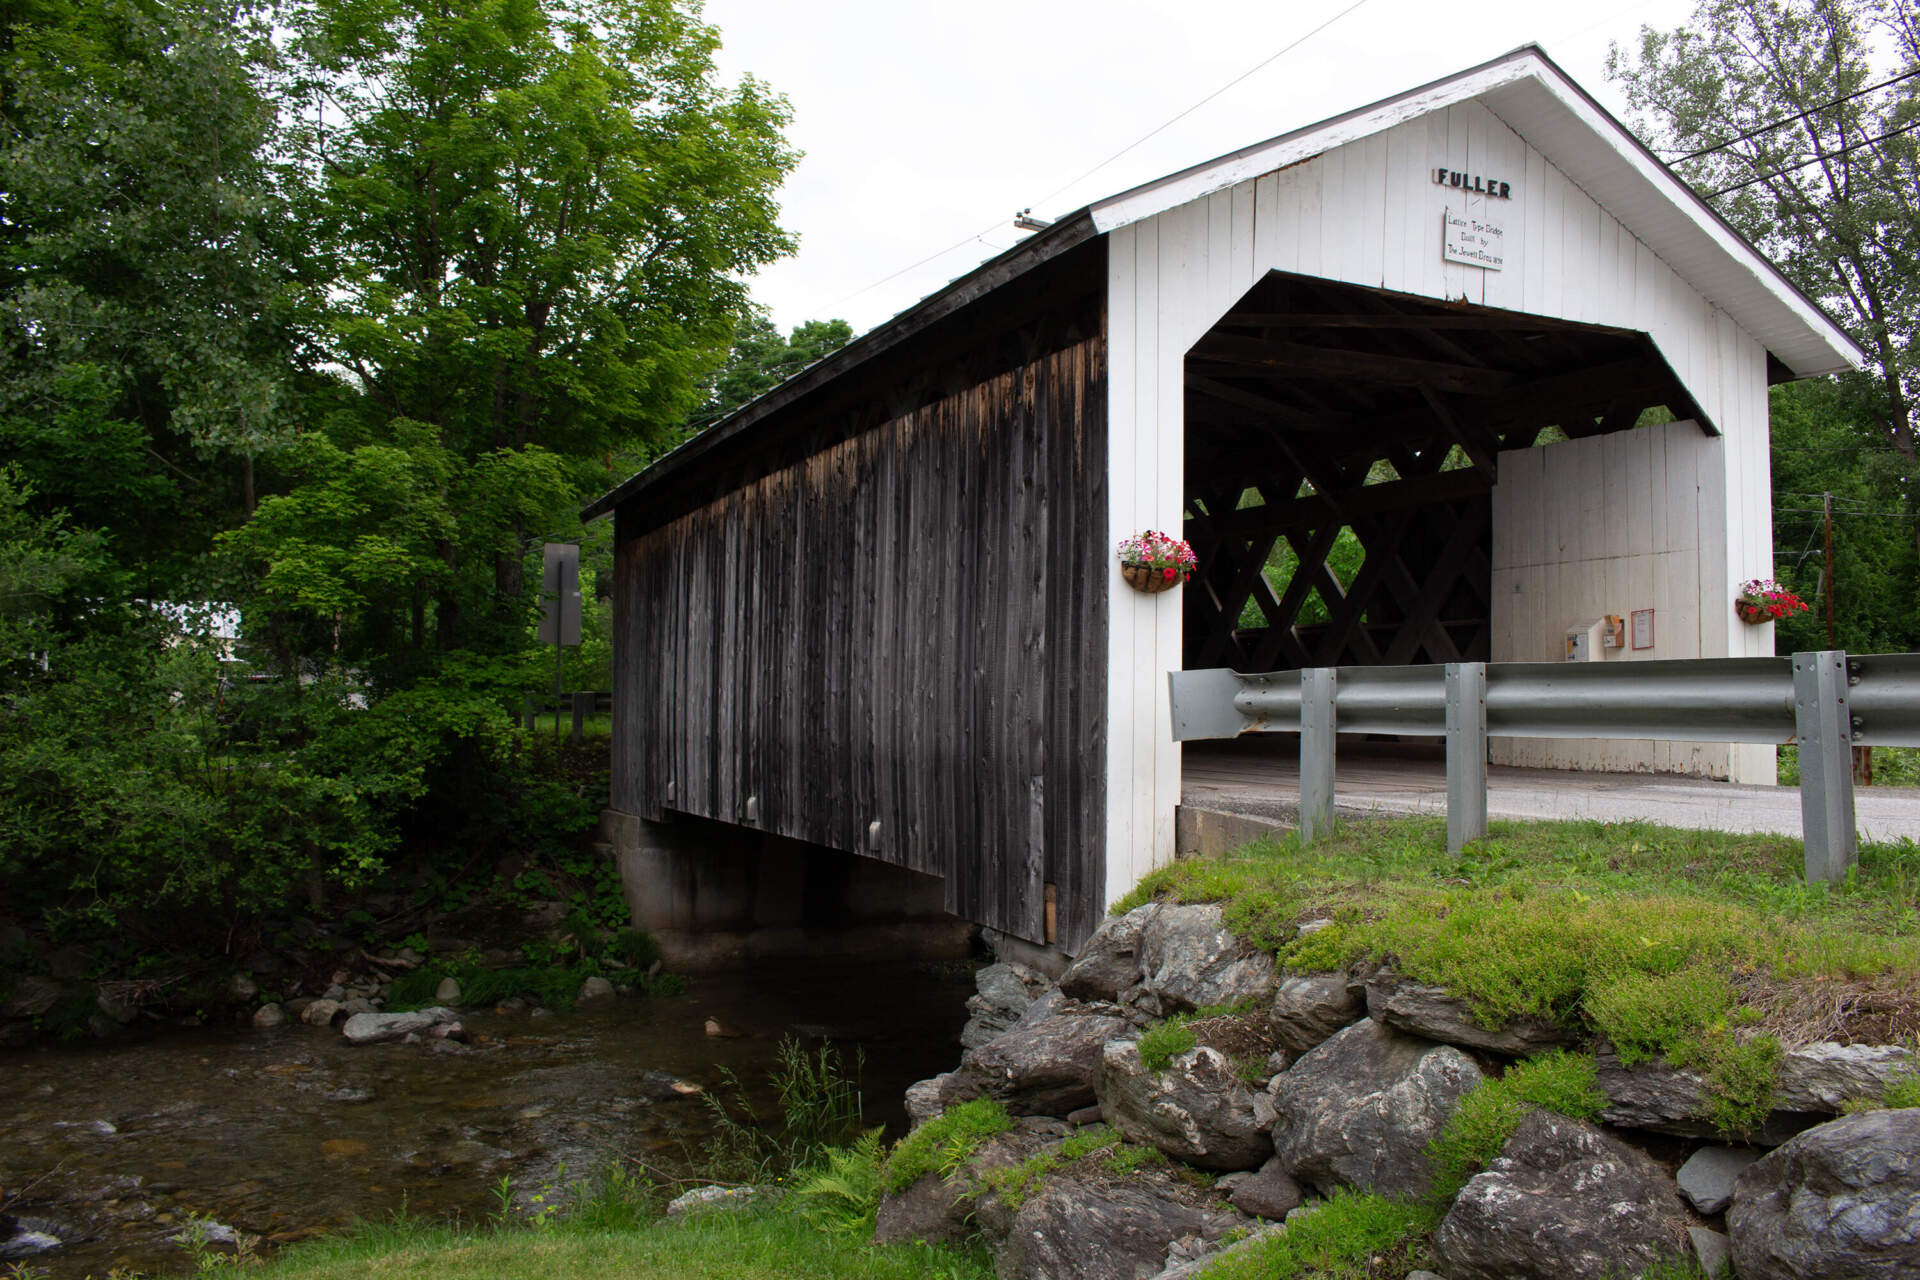 The Fuller covered bridge crosses the Black Falls Brook in Montgomery, Vermont, on June 12. (Zoe McDonald/Vermont Public)